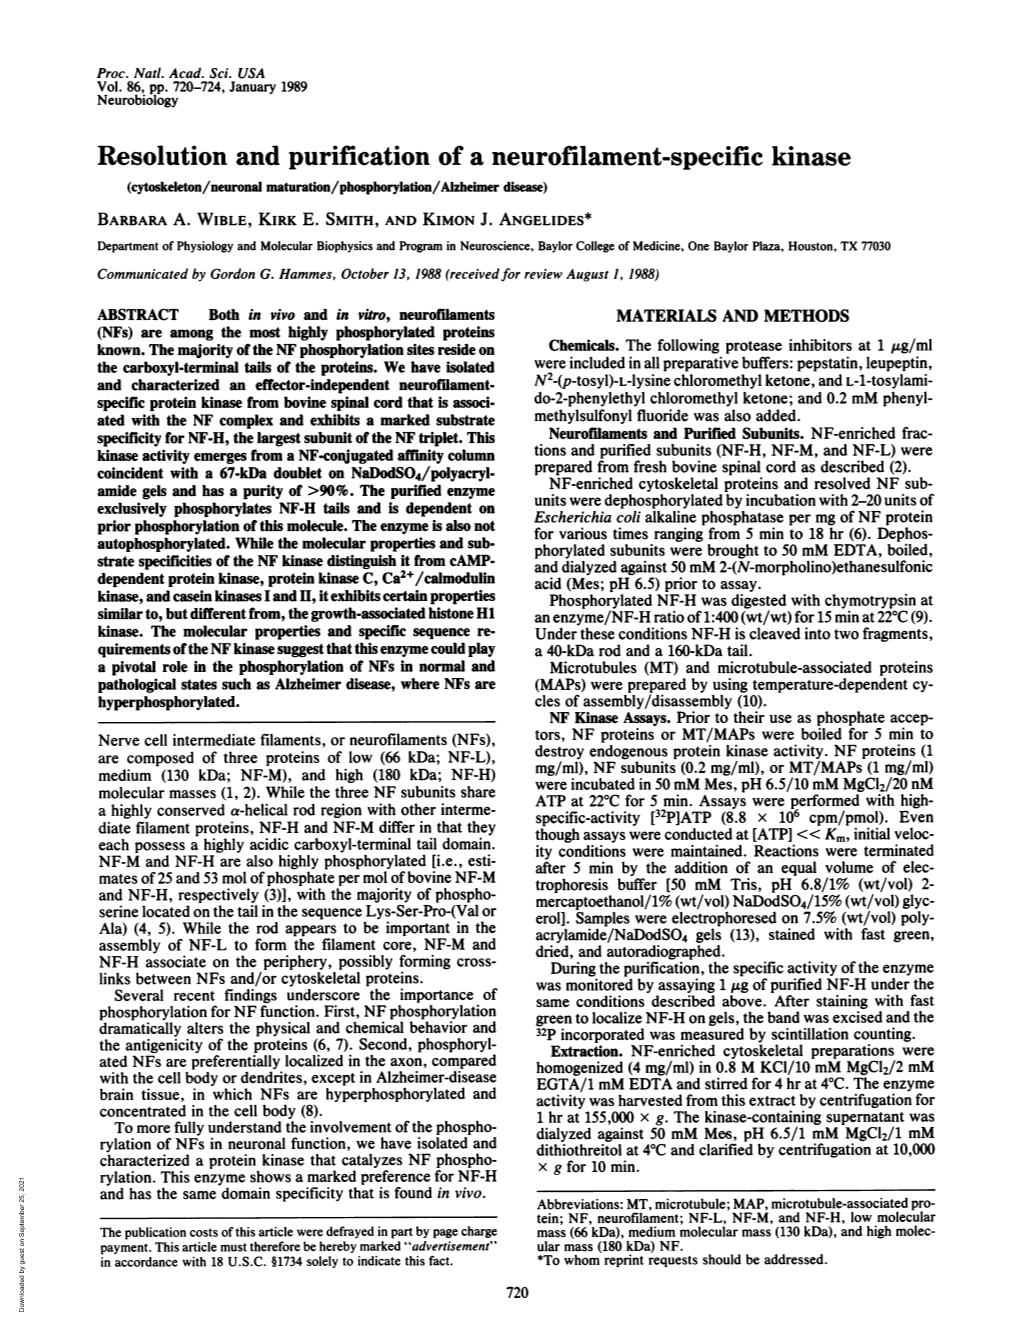 Resolution and Purification of a Neurofilament-Specific Kinase (Cytoskeleton/Neuronal Maturation/Phosphorylation/Alzheimer Disease) BARBARA A